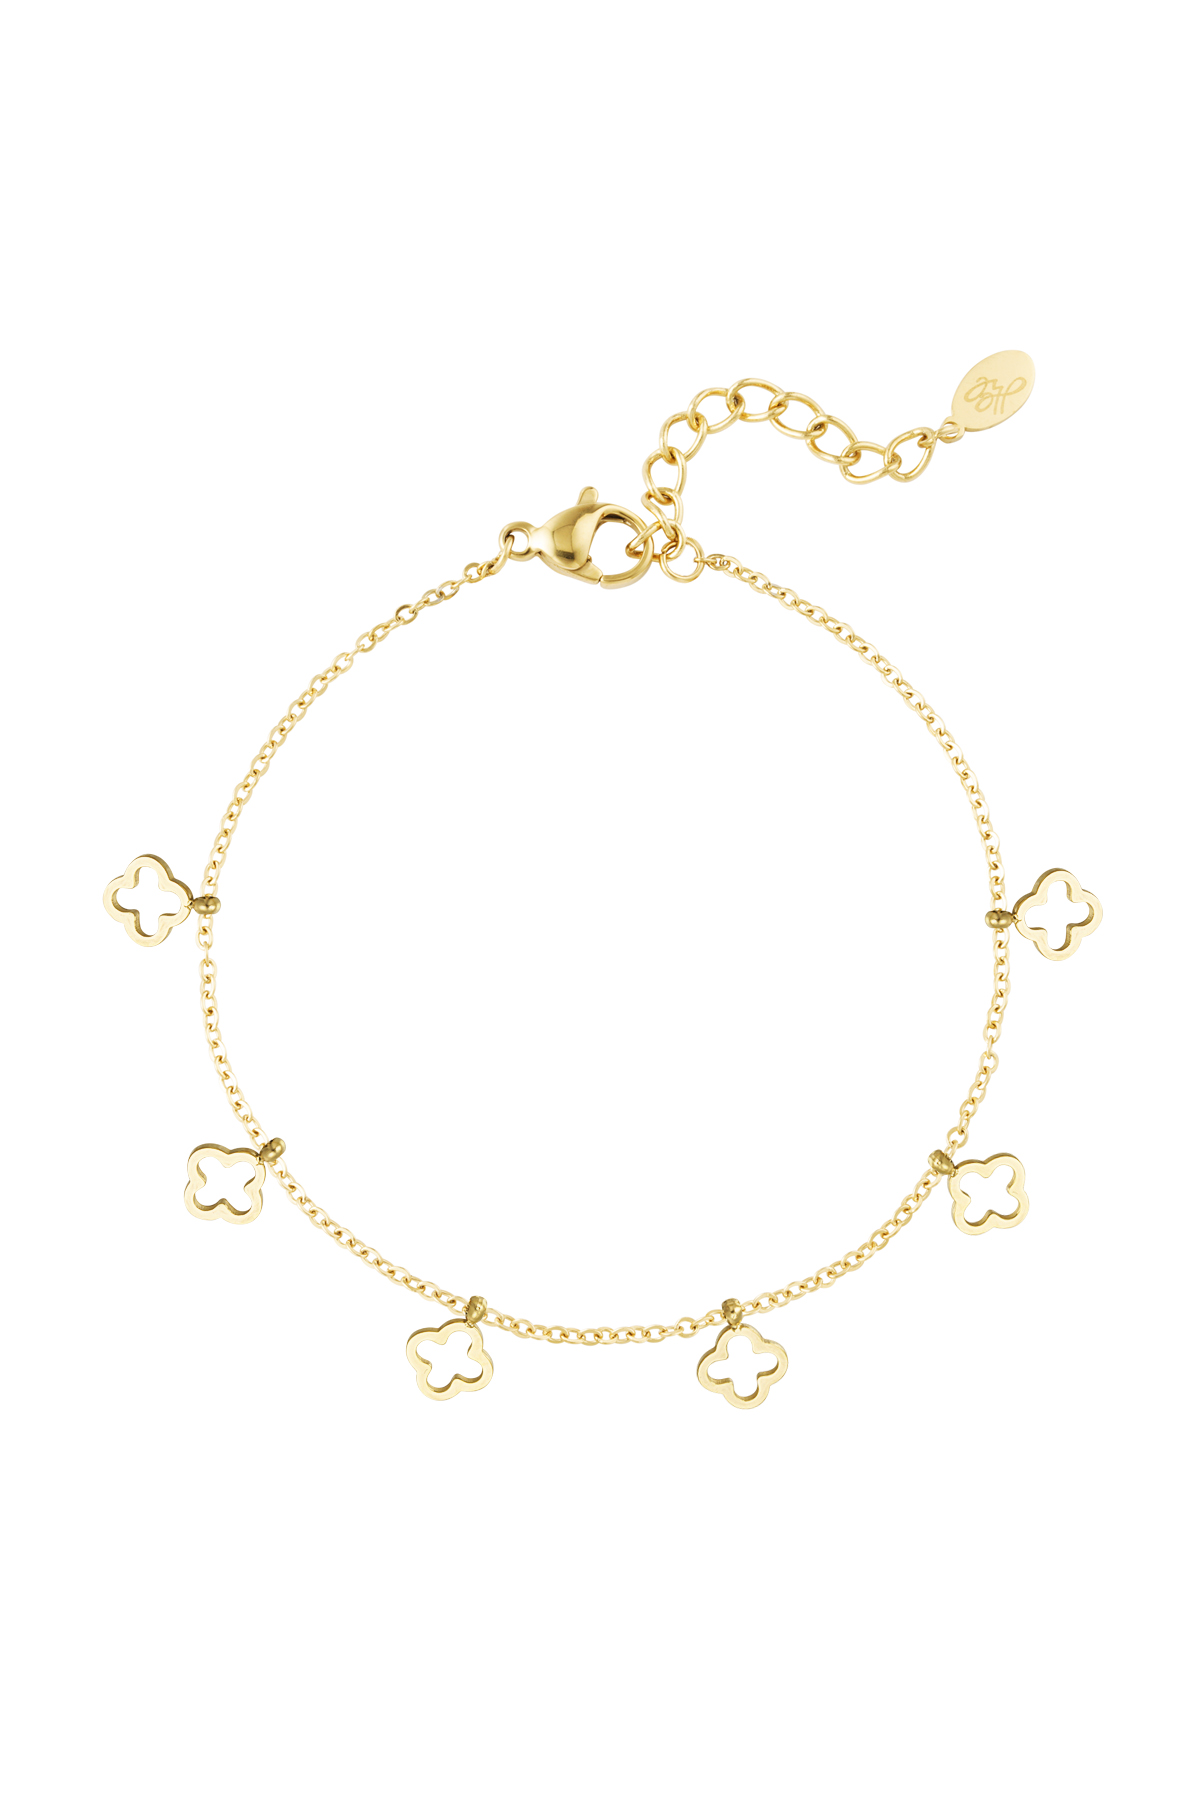 Bracelet 6 clovers - gold h5 